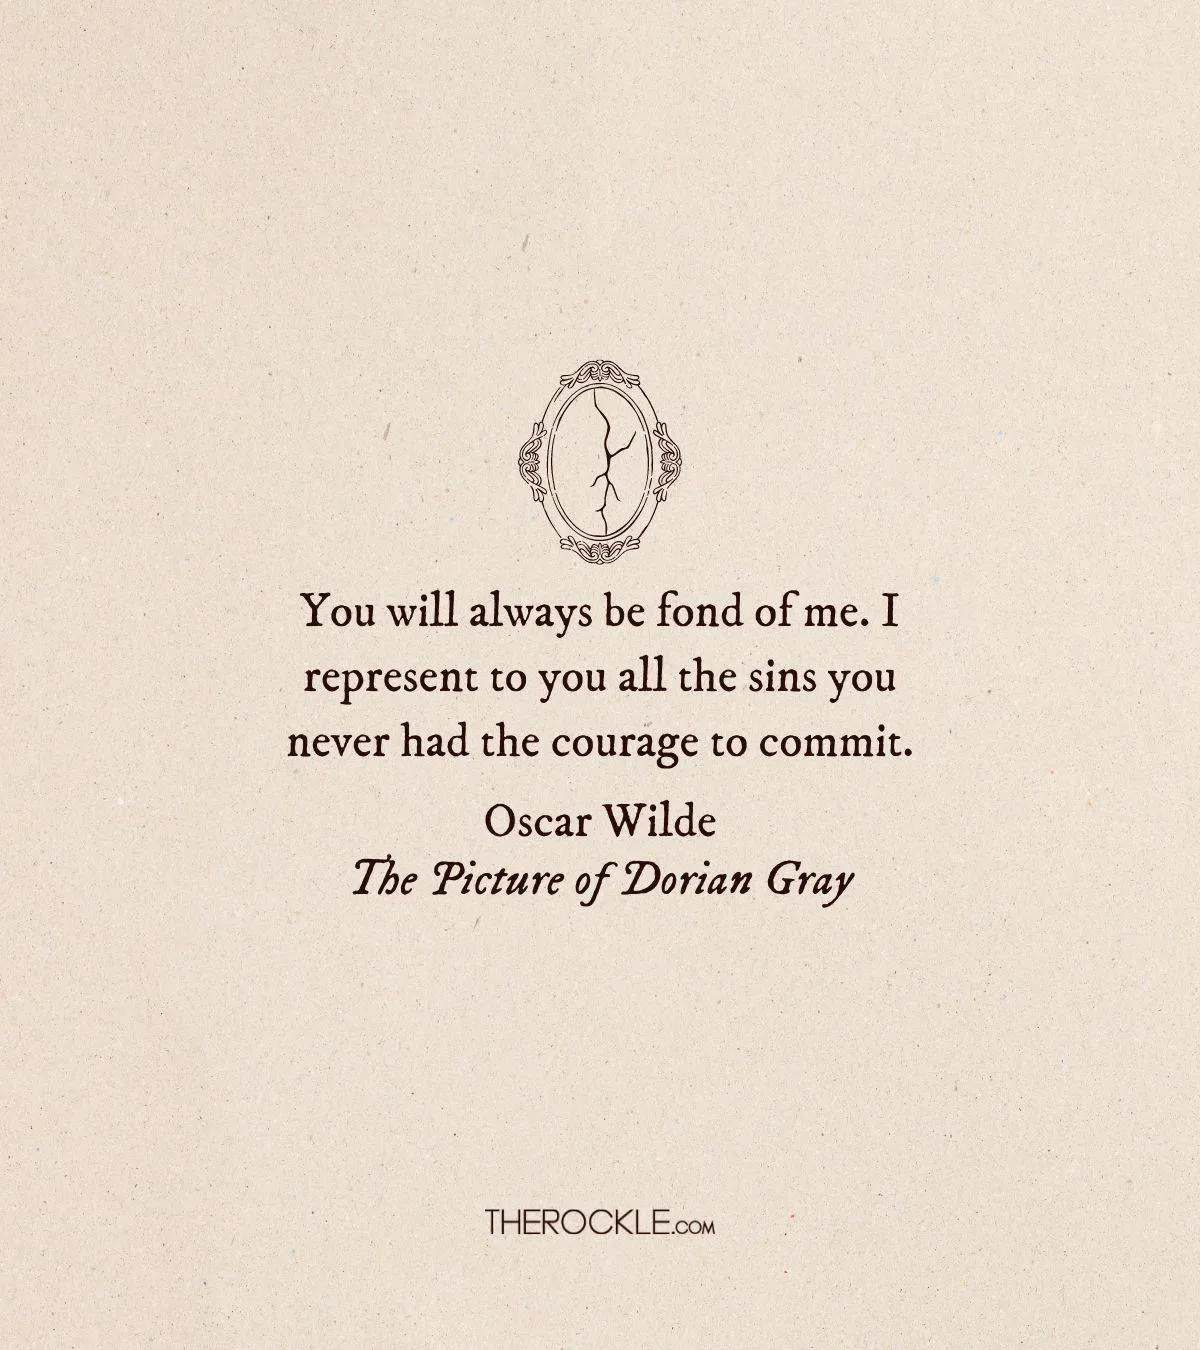 Oscar Wilde's quote on temptation